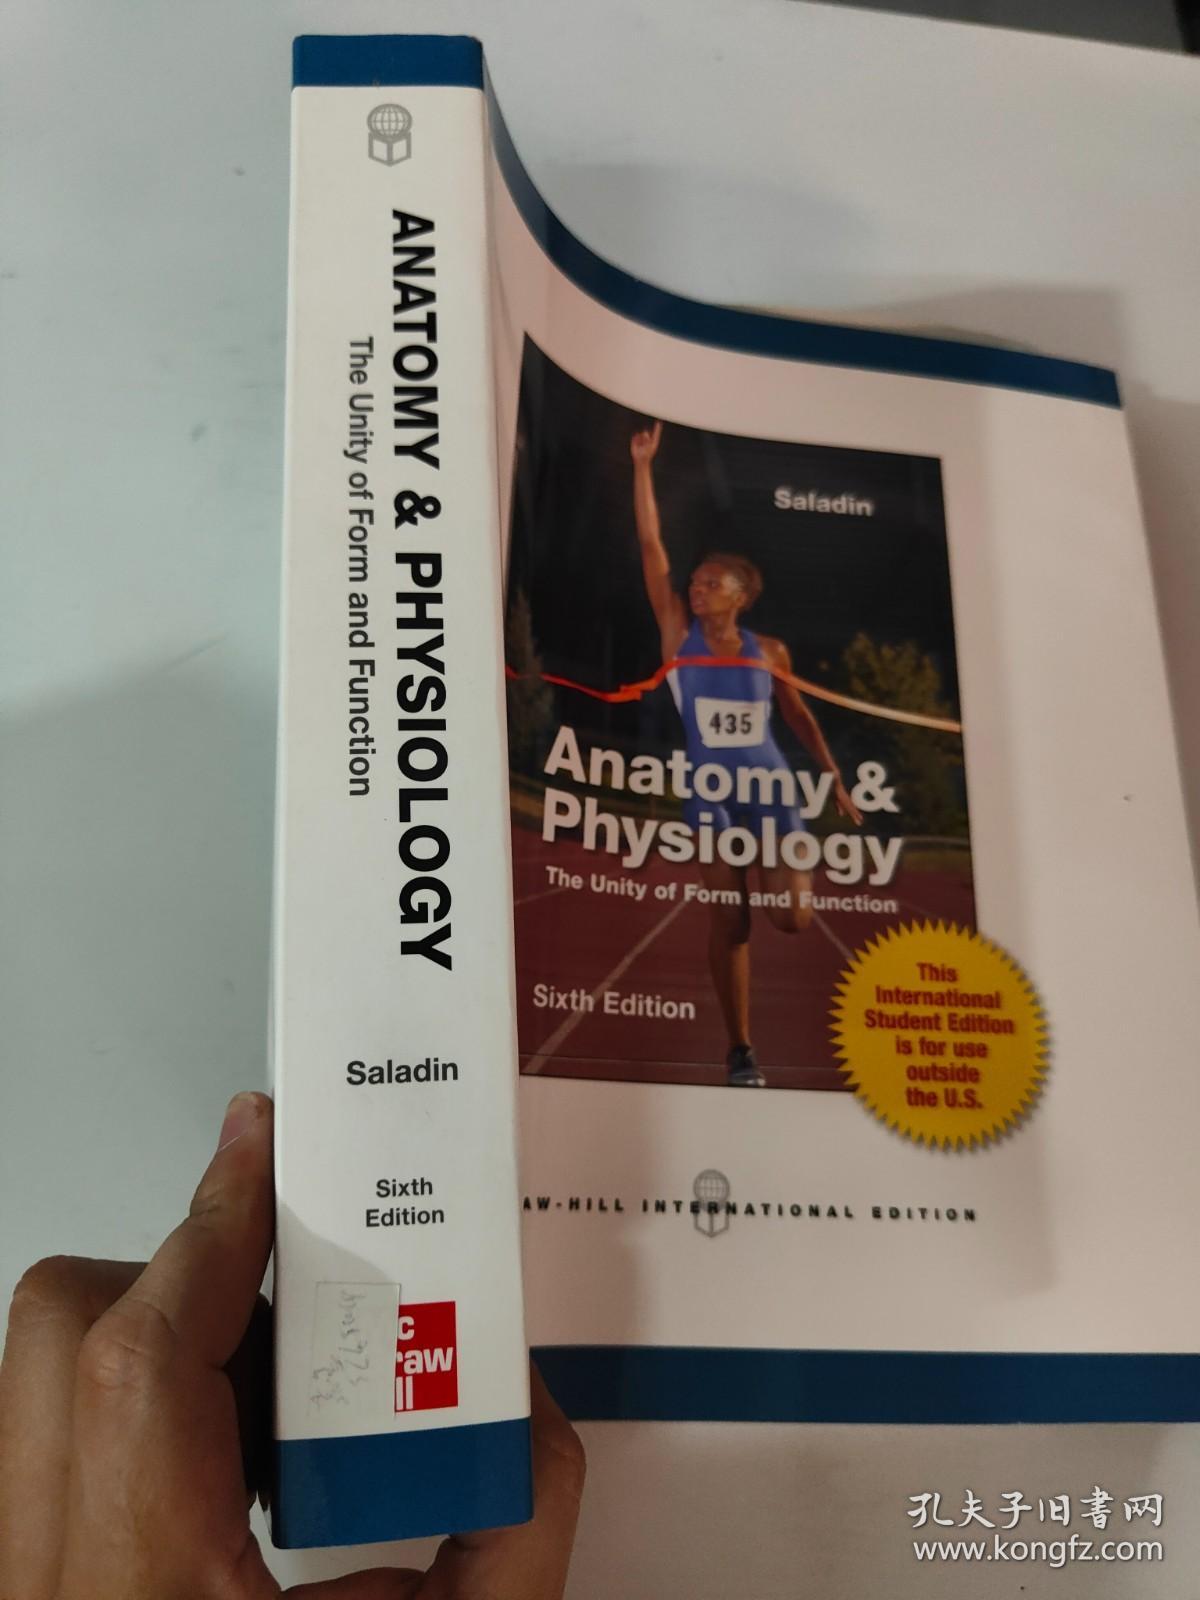 Anatomy & Physiology Sixth Edition 解剖学与生理学第六版